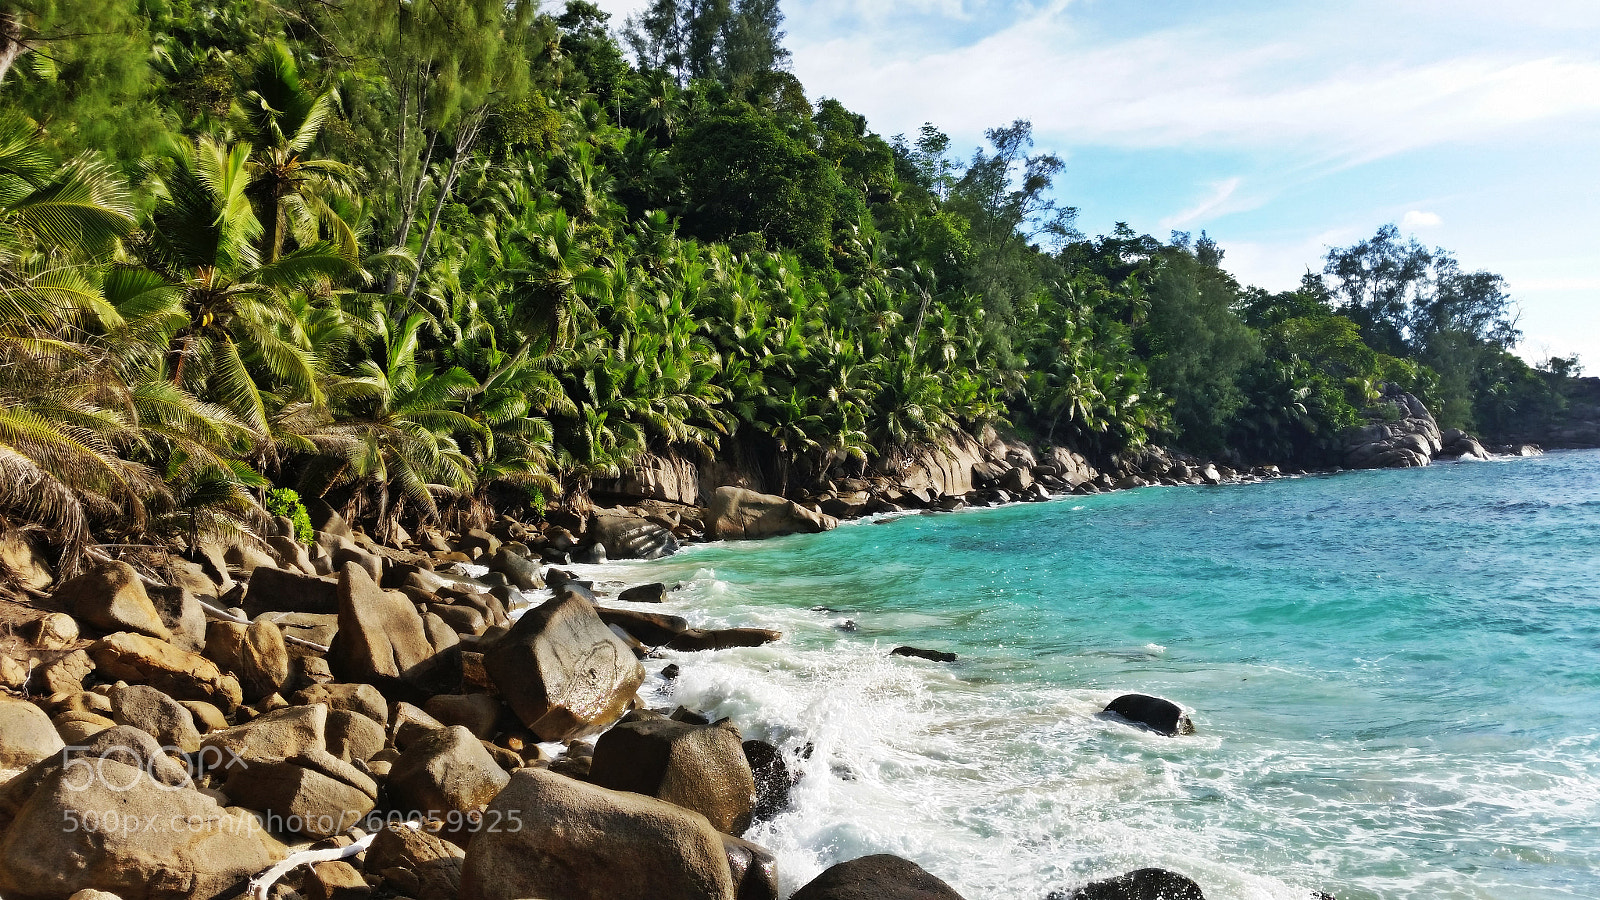 Samsung Galaxy S5 sample photo. Banyan tree beach resort photography